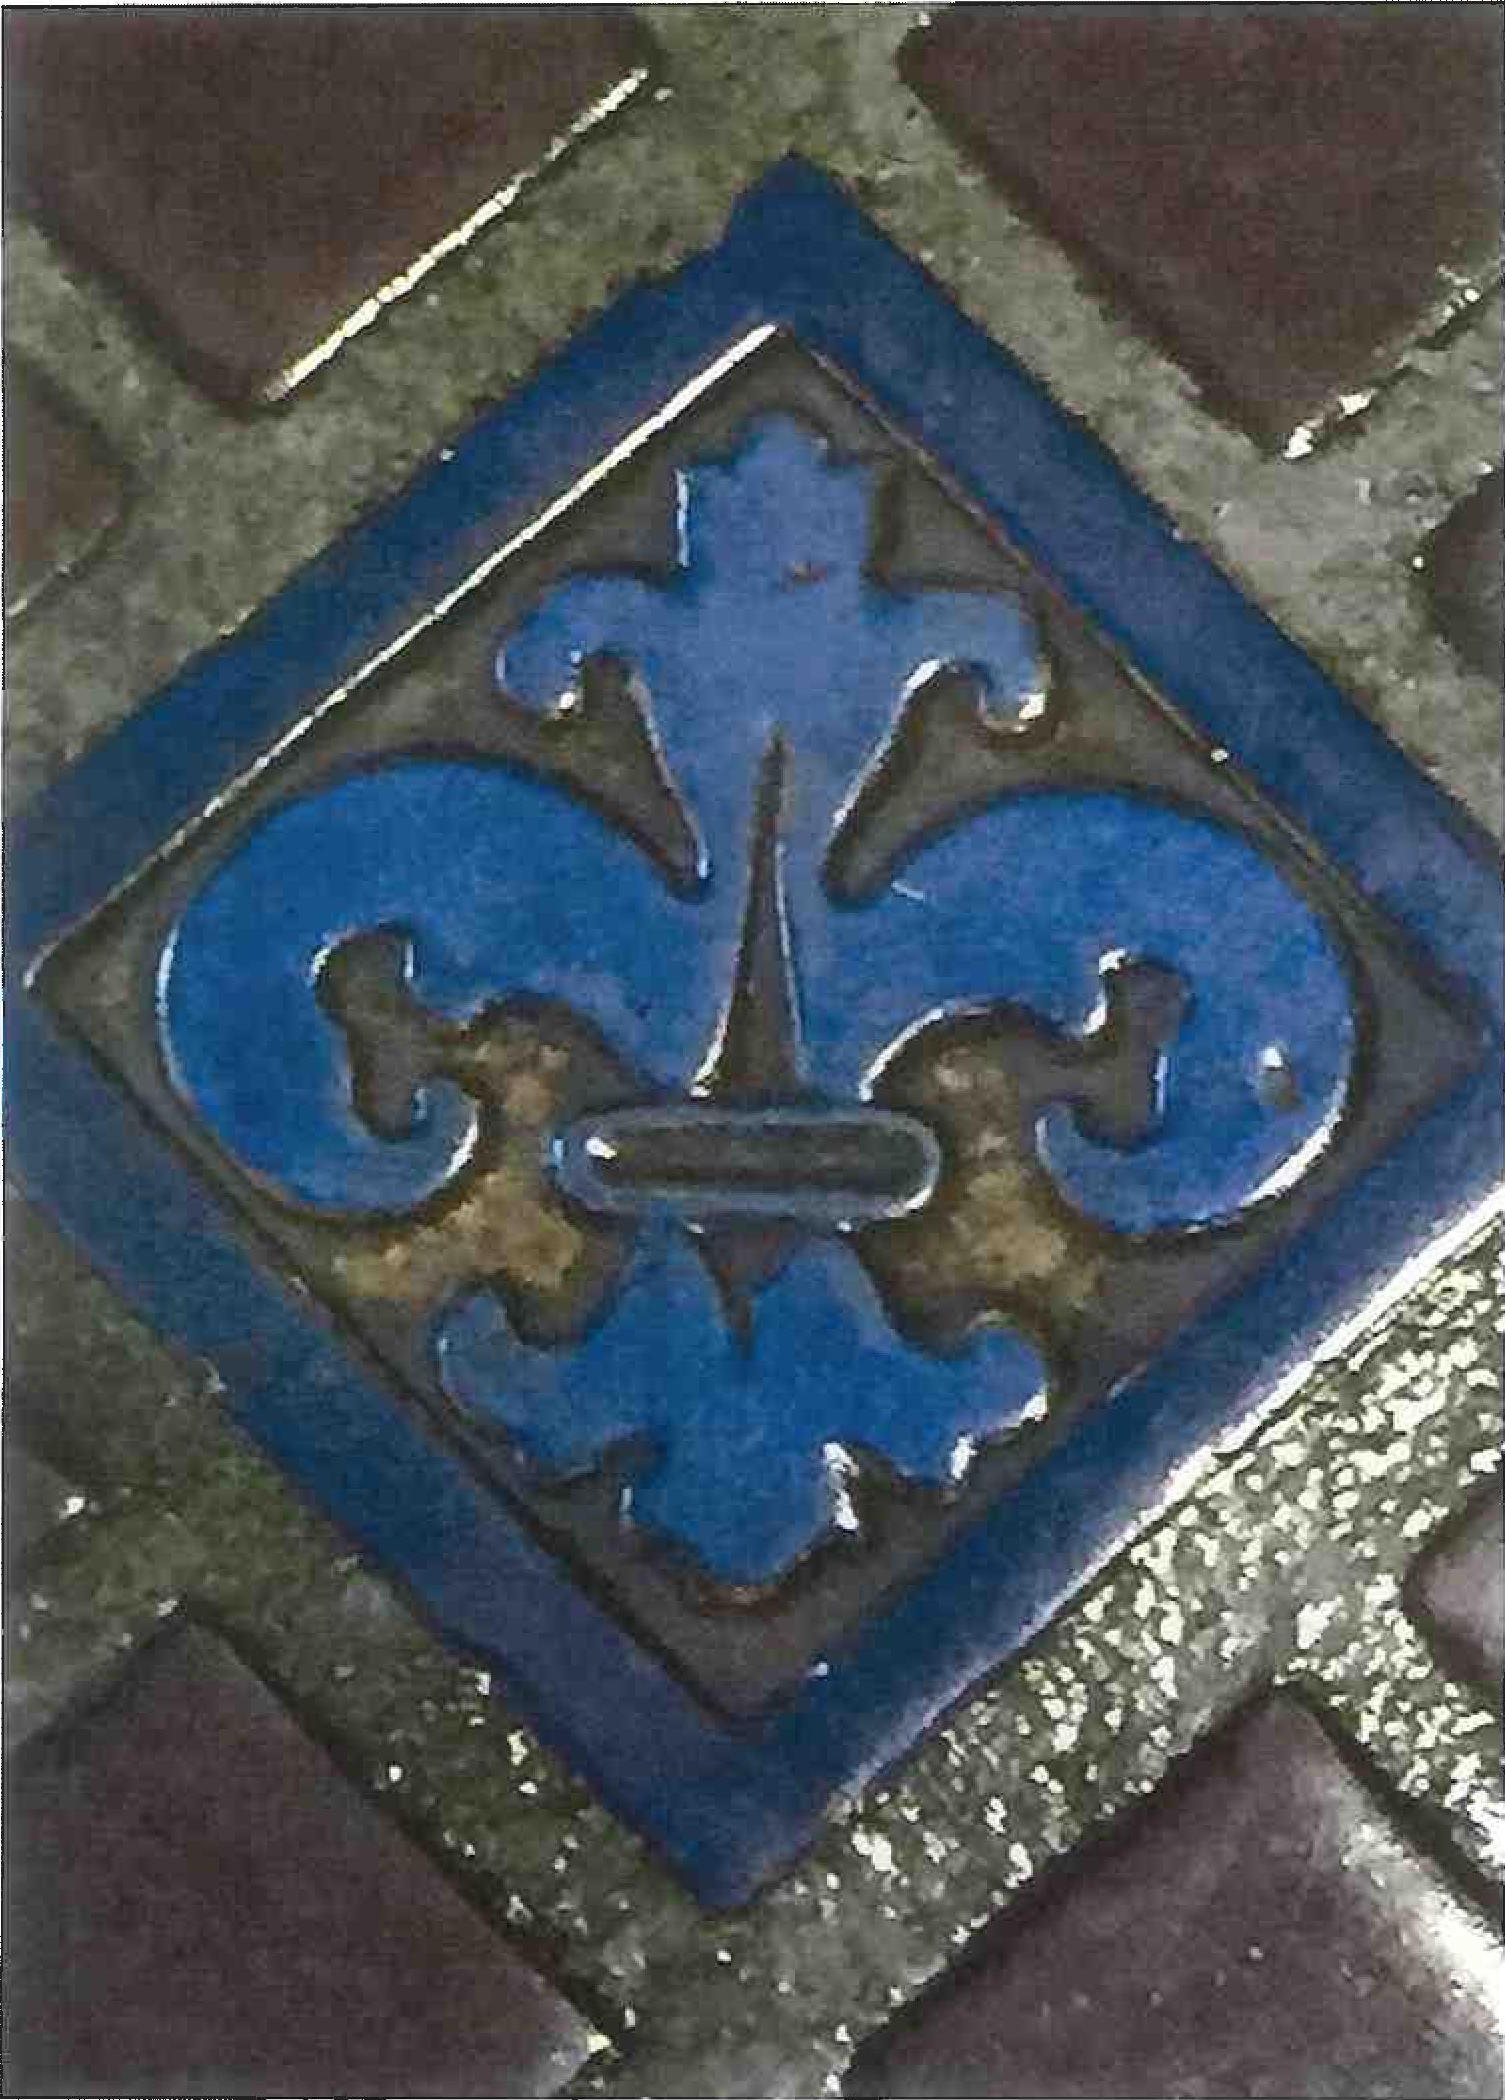 Variations of the fleur-de-lis were popular designs for insert tiles commonly seen in Flint Faience floor installations.